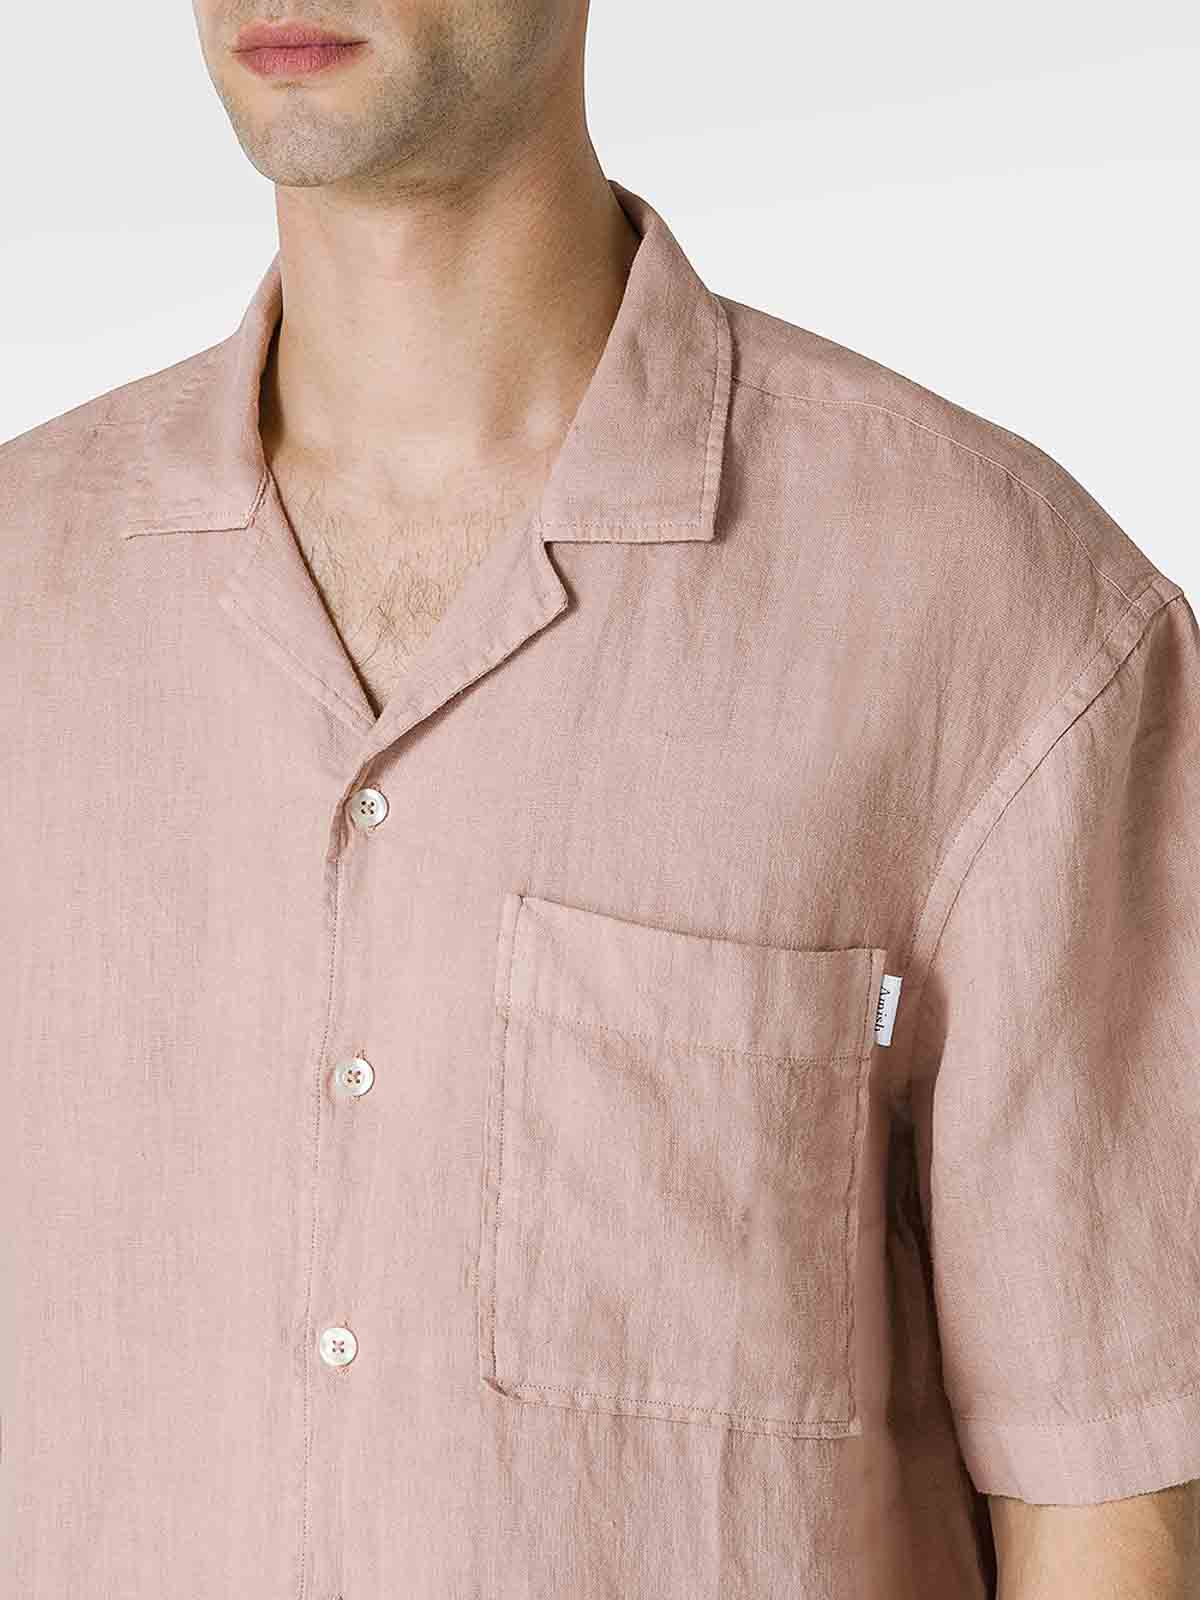 Shop Amish Camisa - Color Carne Y Neutral